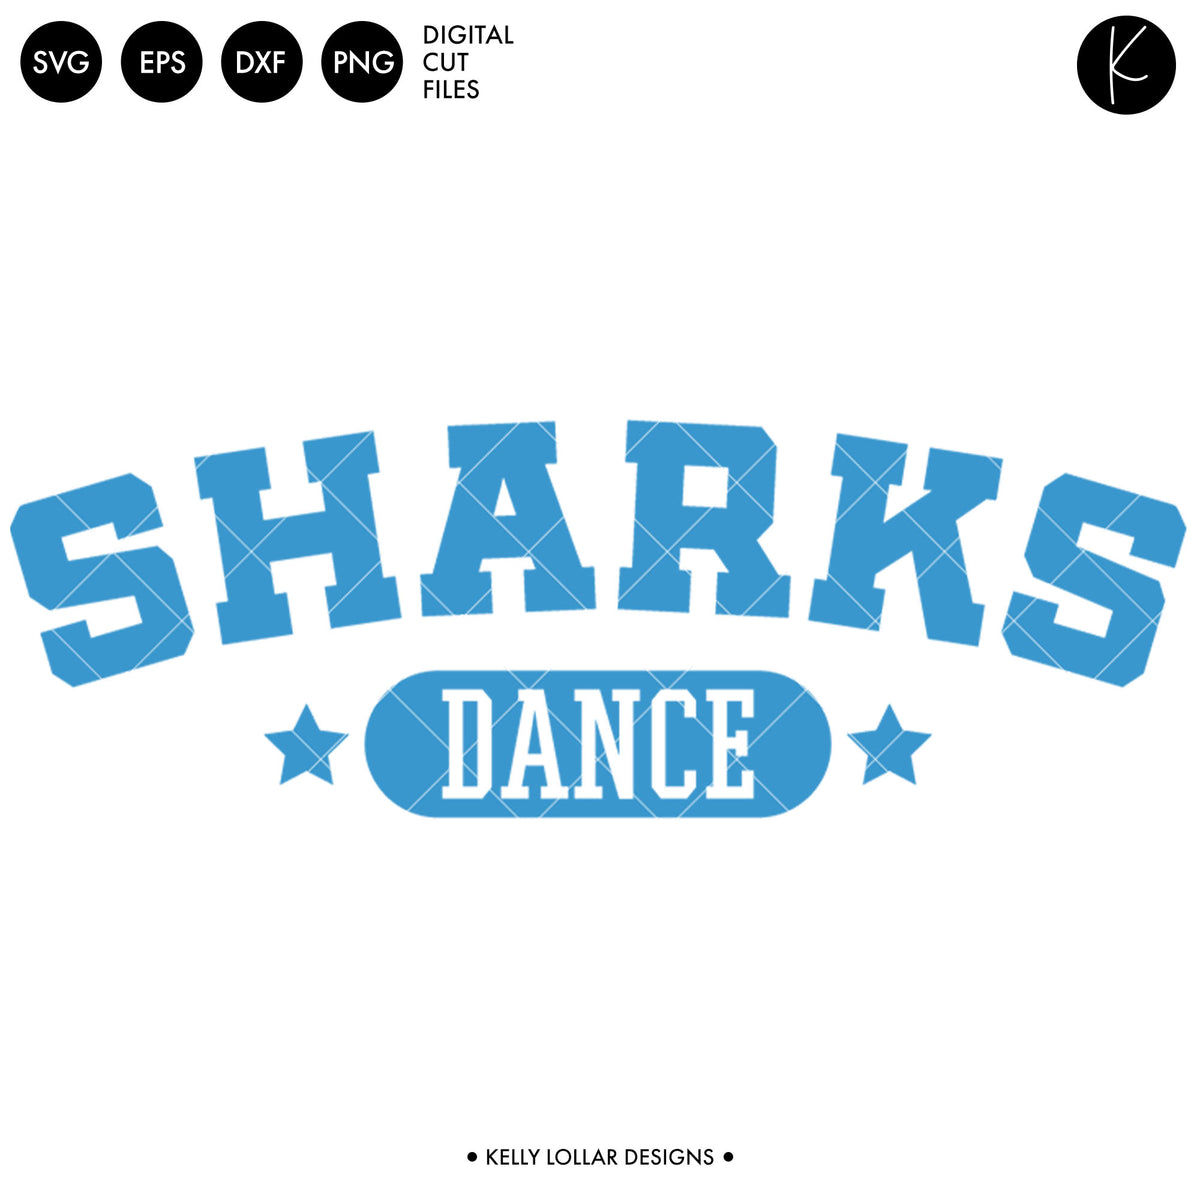 Sharks Dance Bundle | SVG DXF EPS PNG Cut Files